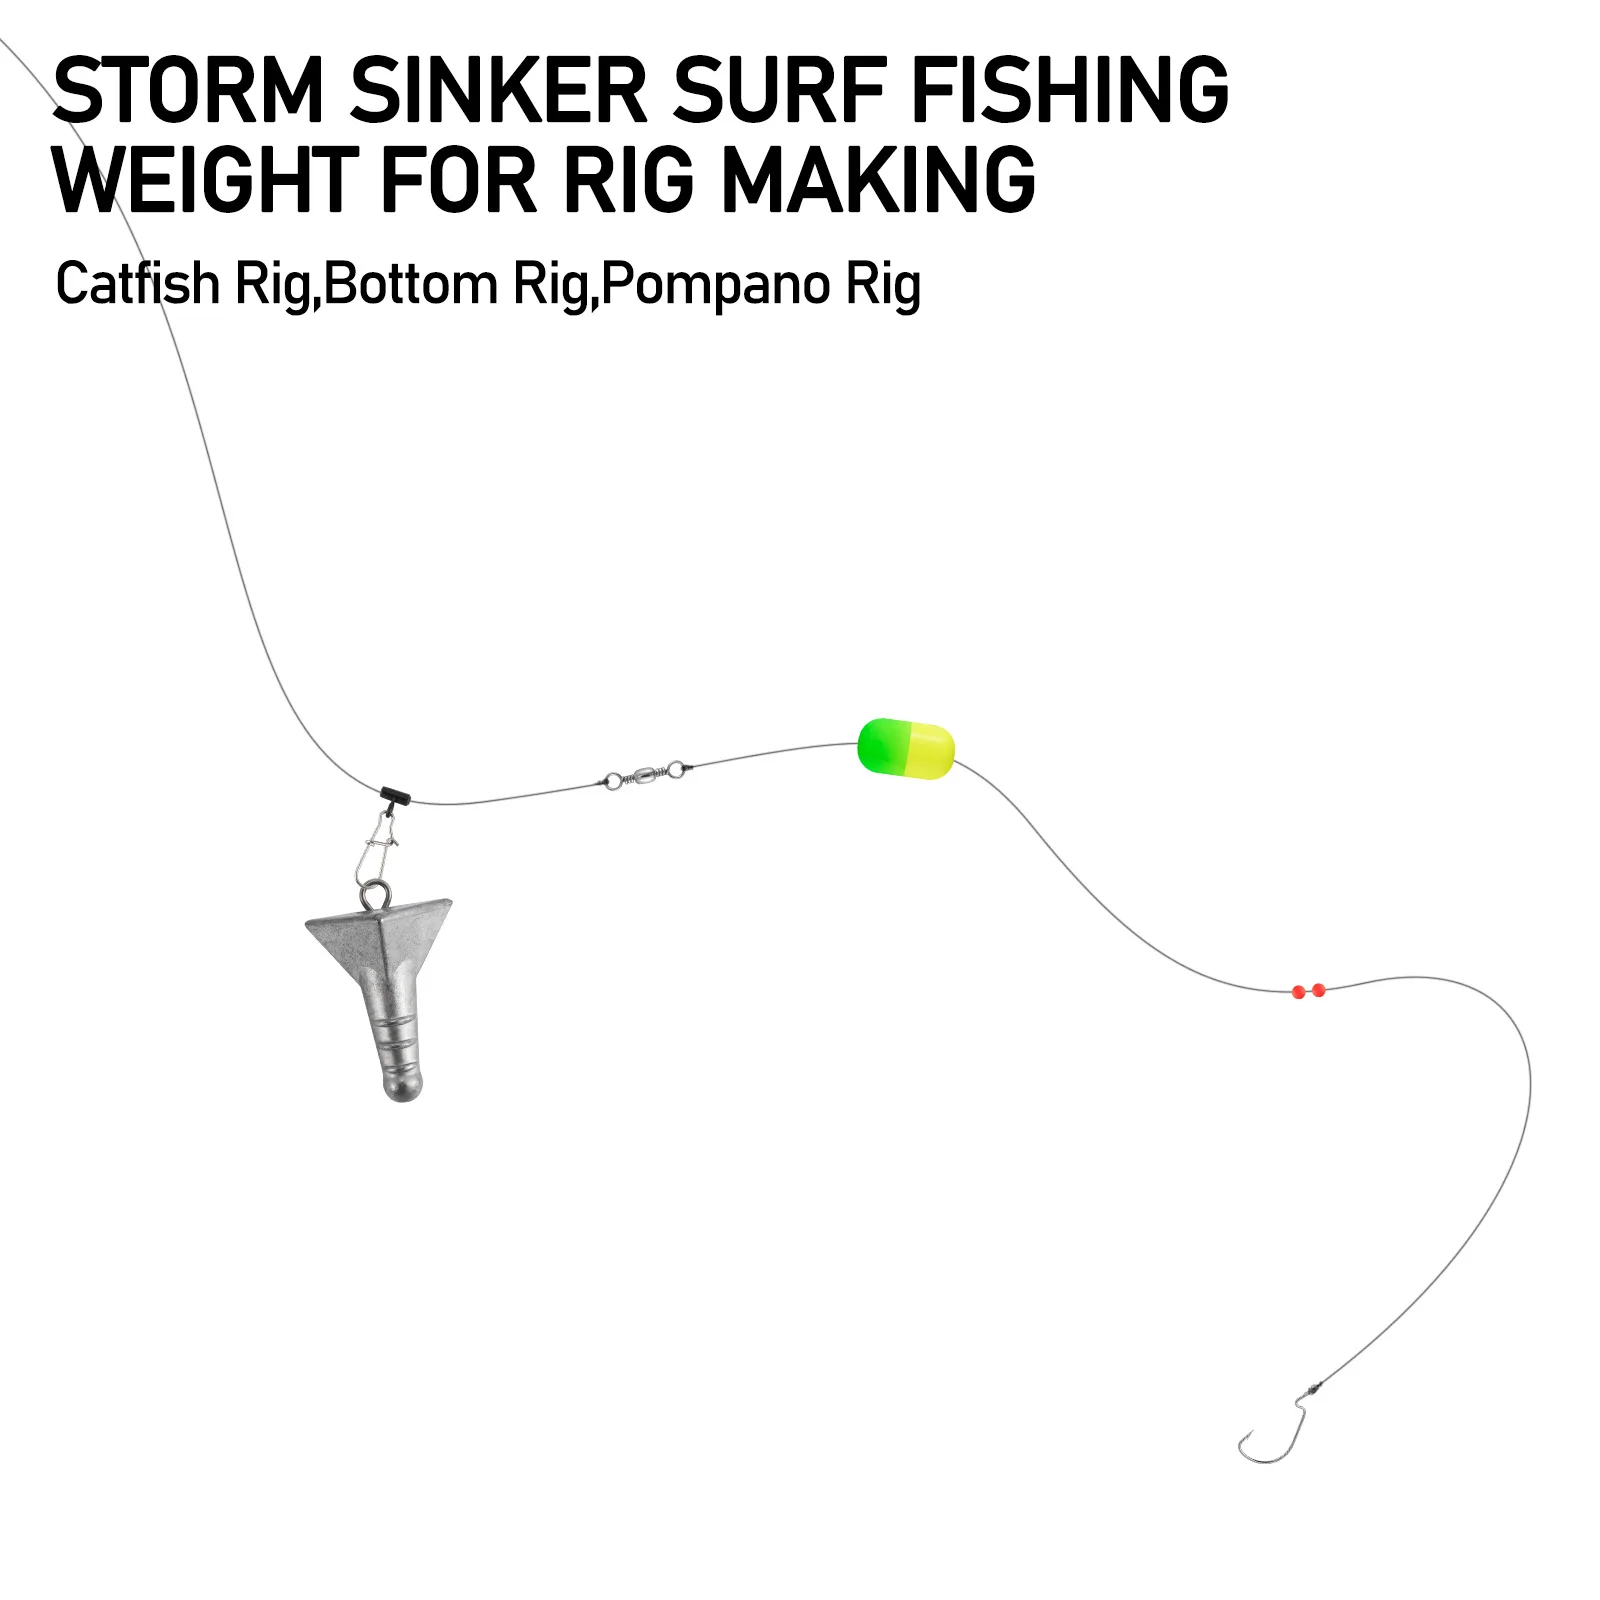 5pcs Storm Sinker Hatteras Surf Fishing Weight Pyramid Sinker